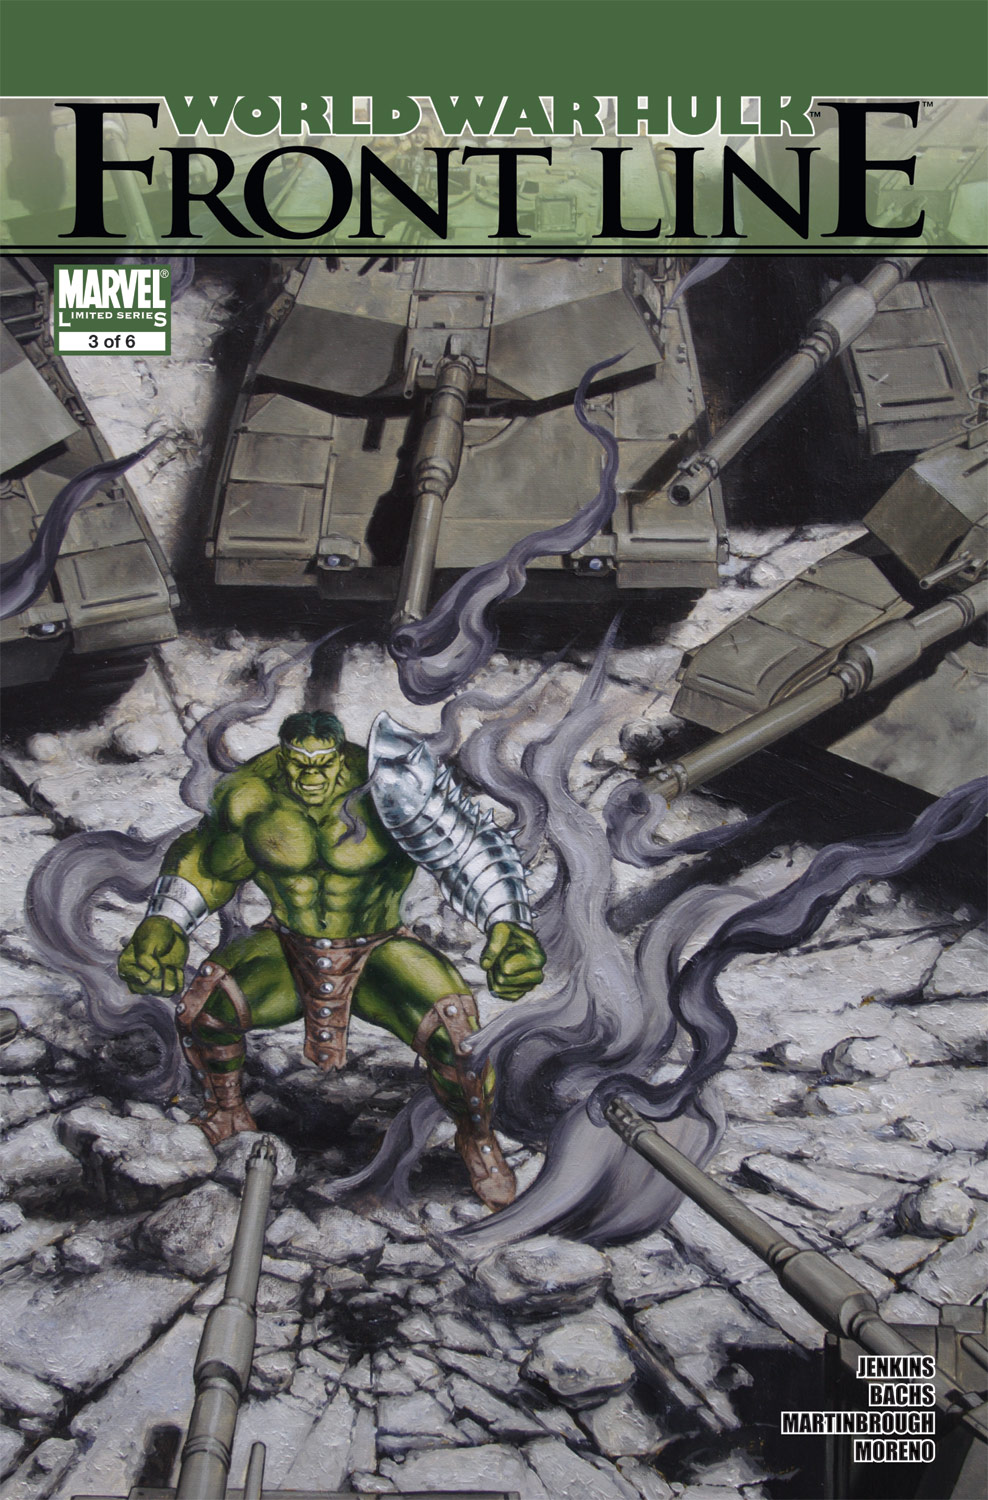 World War Hulk: Front Line (2007) #3